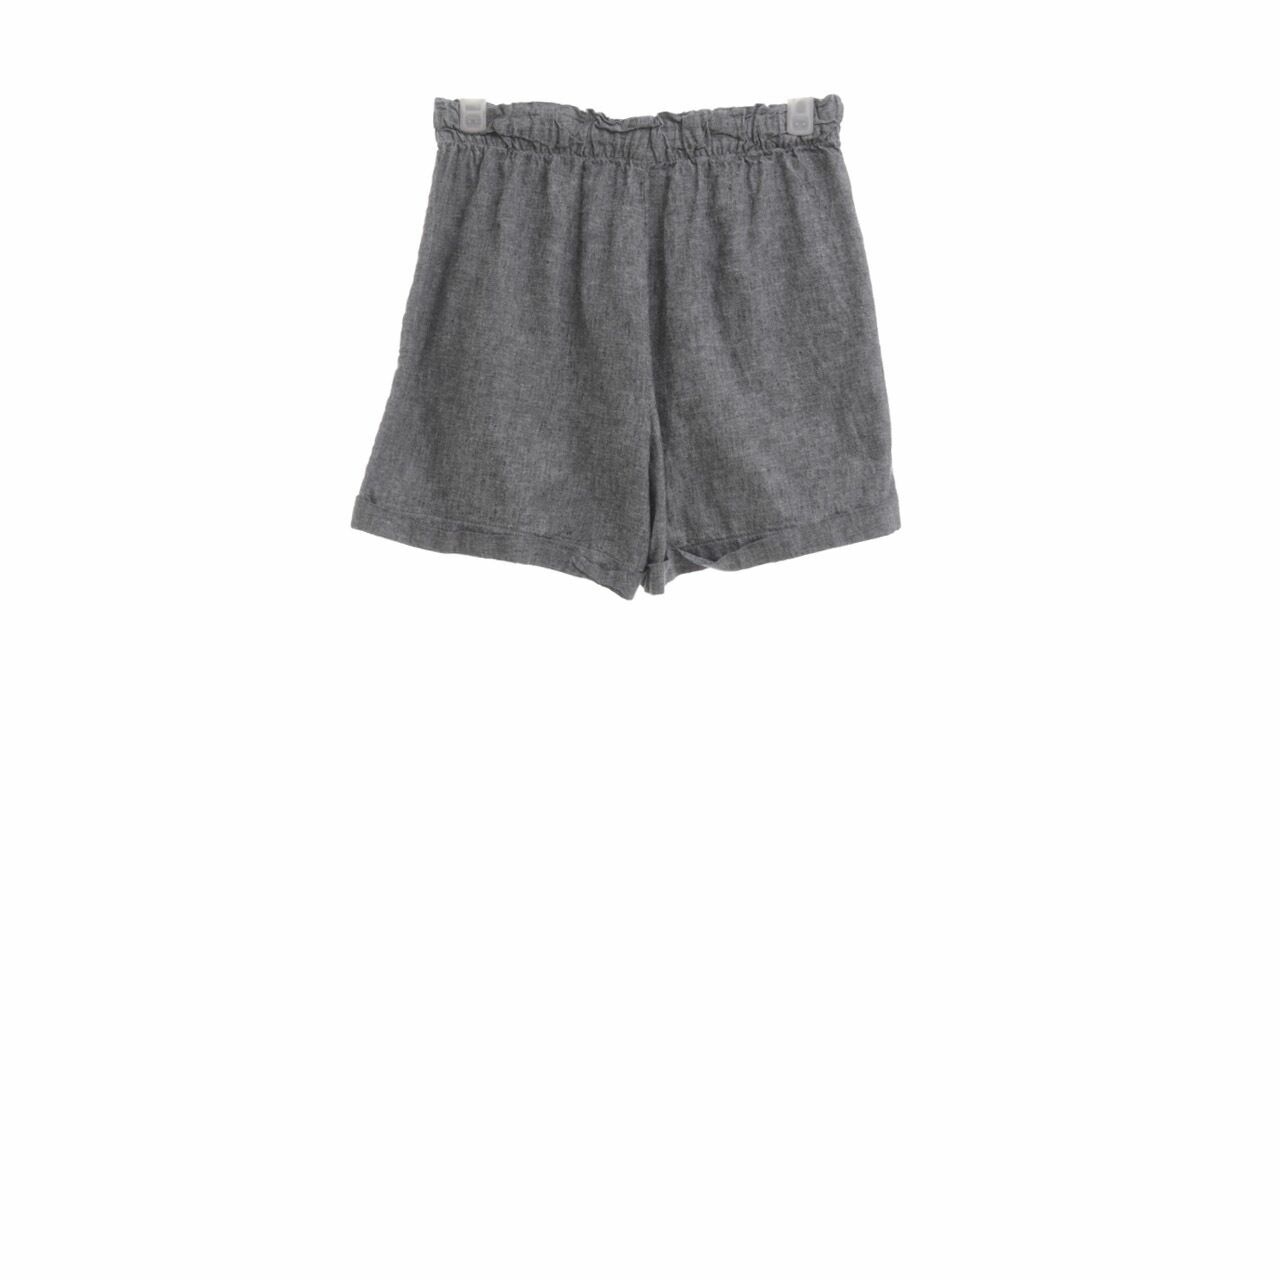 UNIQLO Grey Shorts Pants